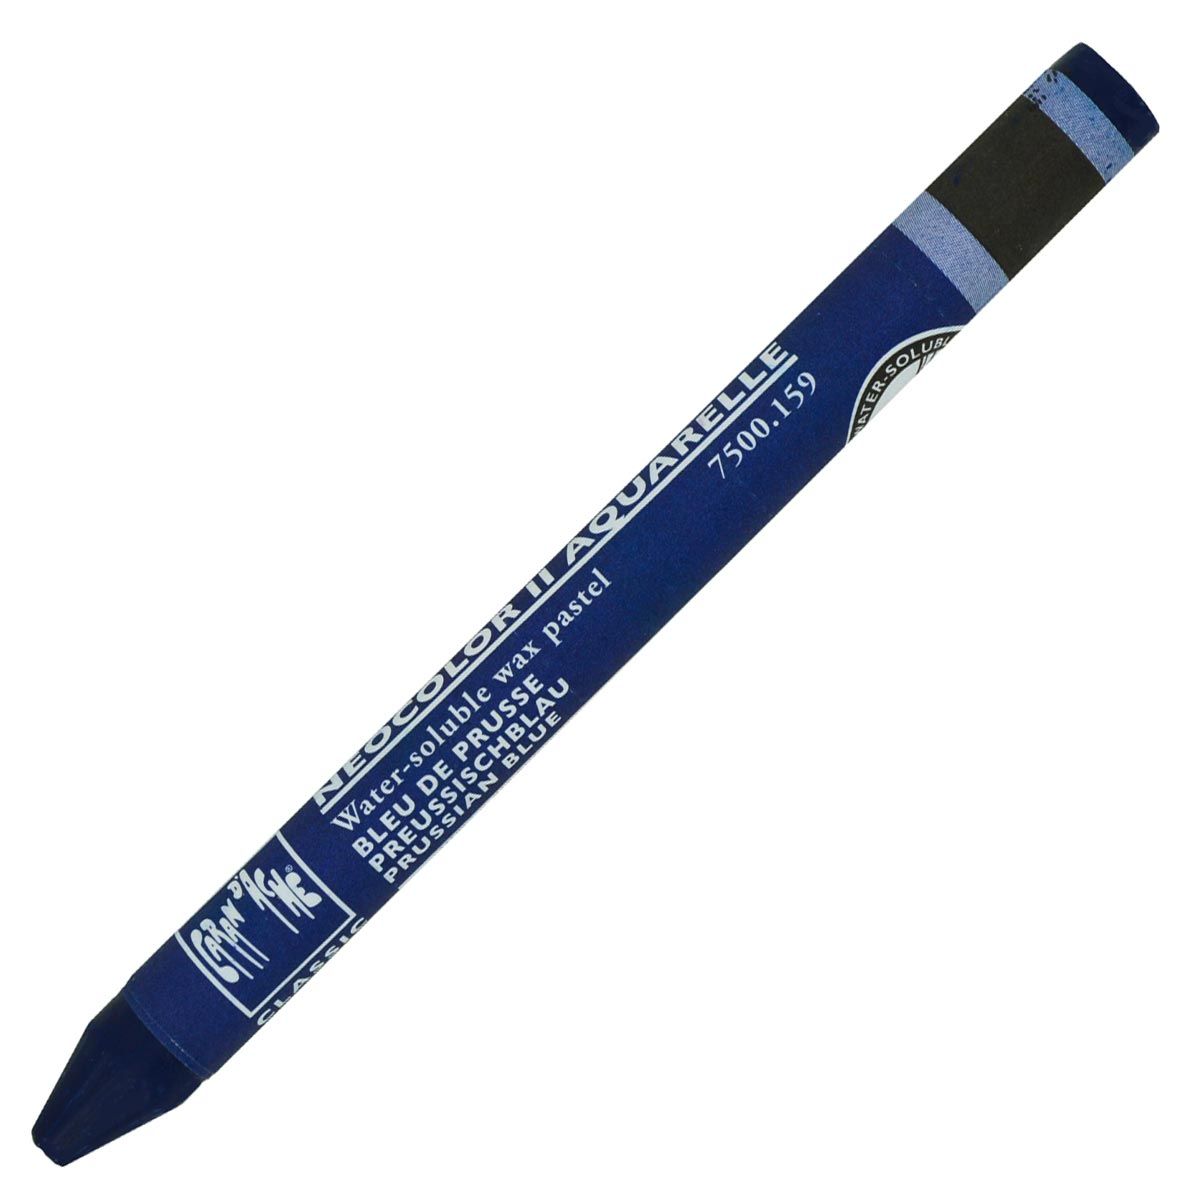 Neocolor II Aquarelle Artists’ Crayon - Prussian Blue 159